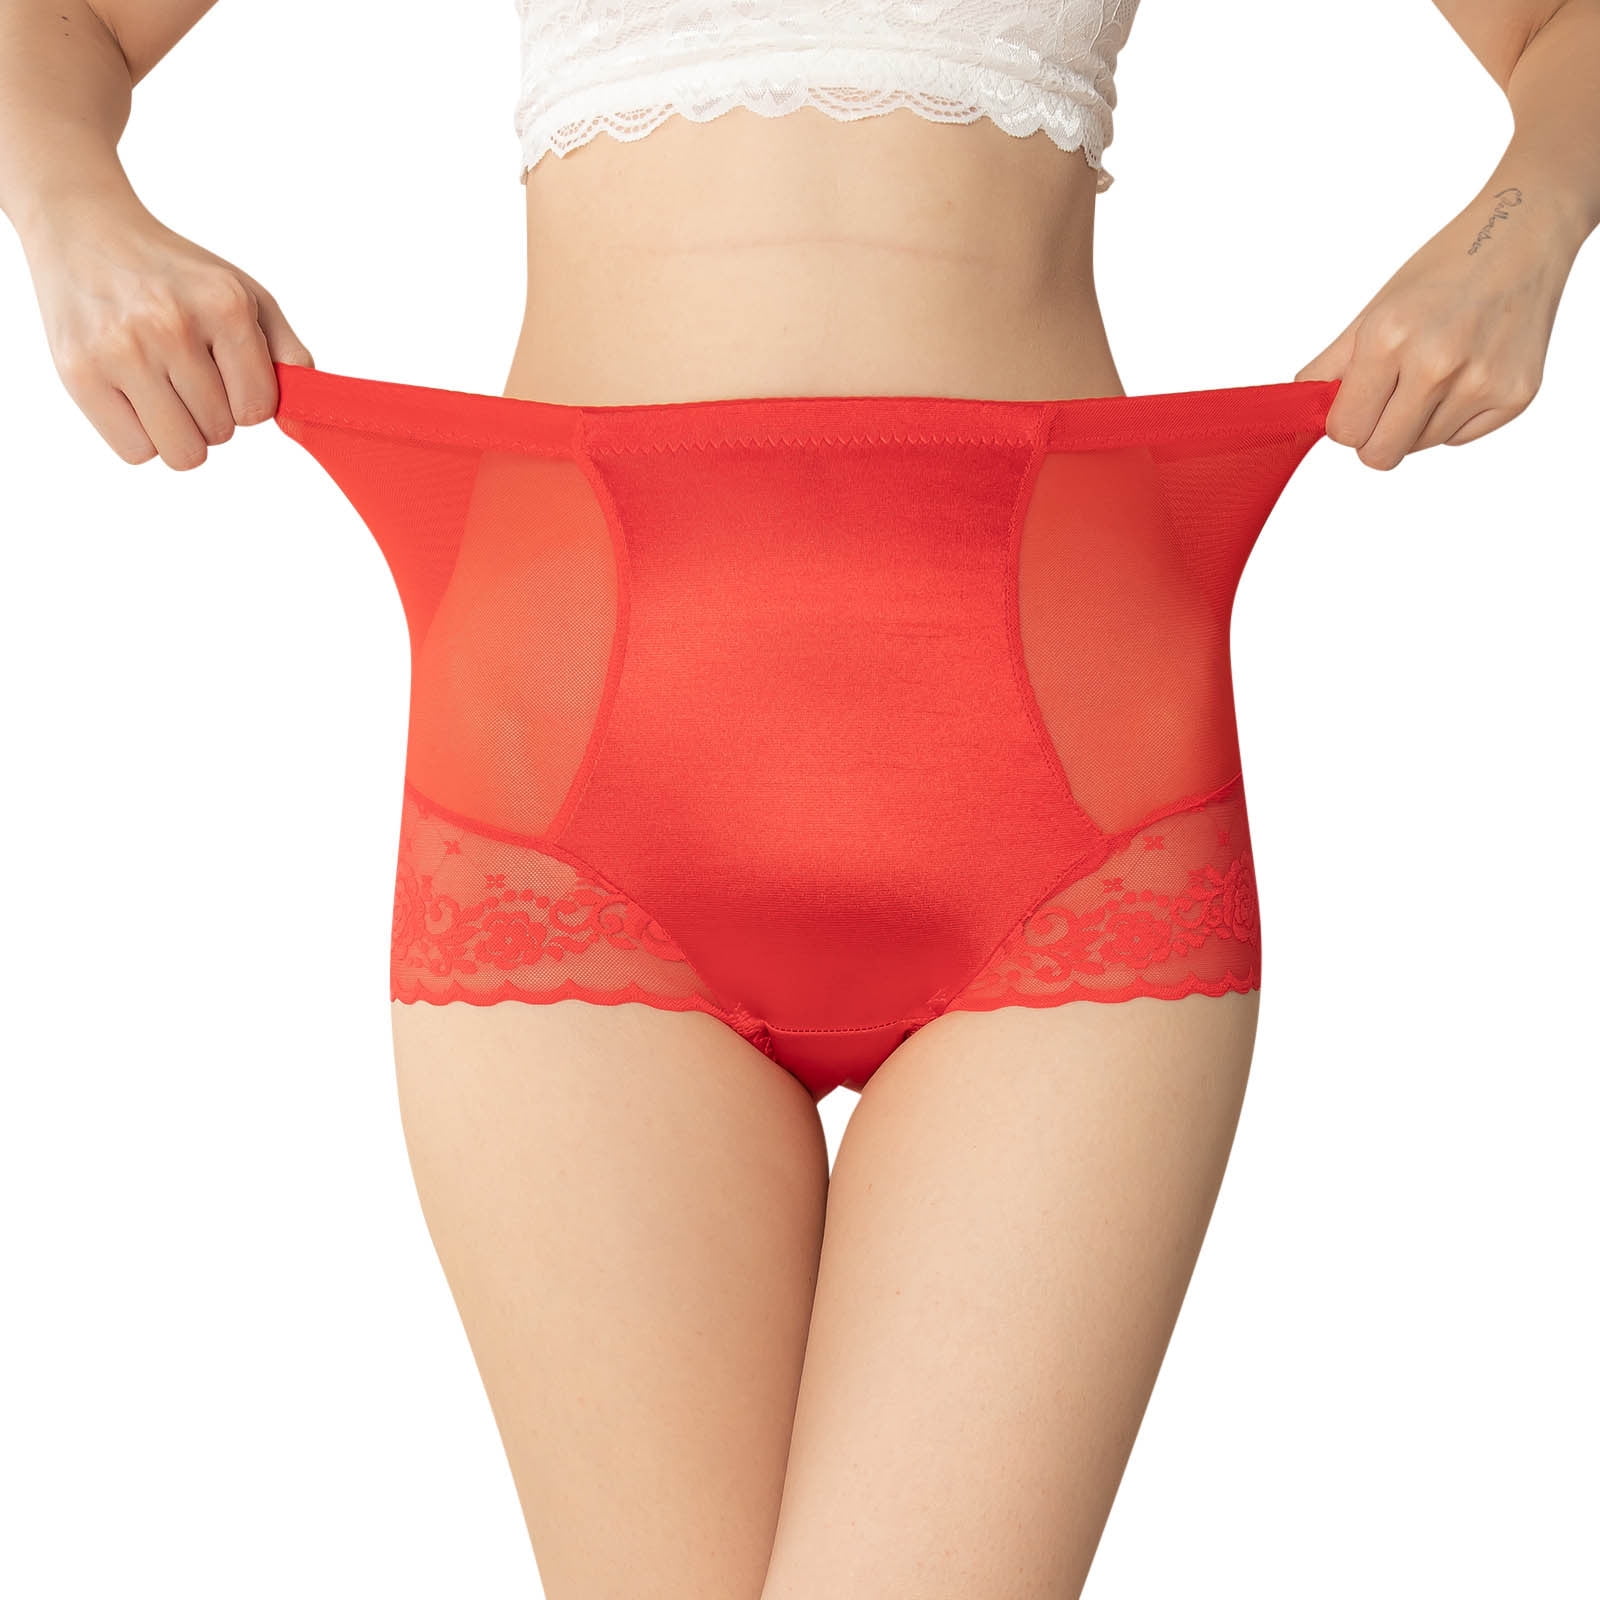 adviicd Nylon Panties for Women Women's Feeling Flexible Seamless Hi Cut  Panty Pink Large